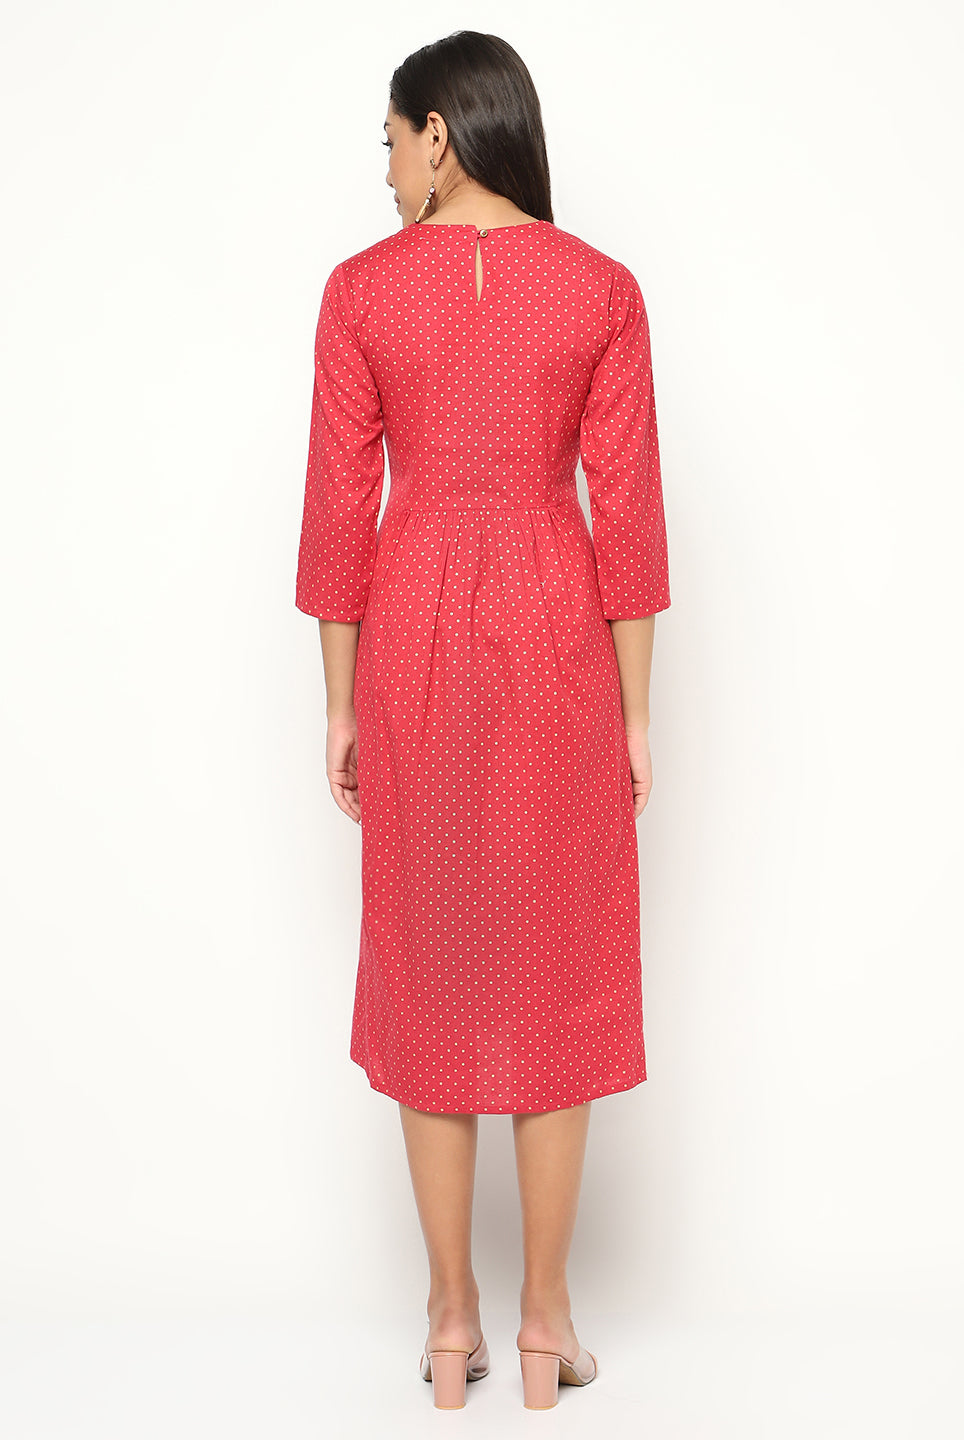 Scarlet Emb Dress